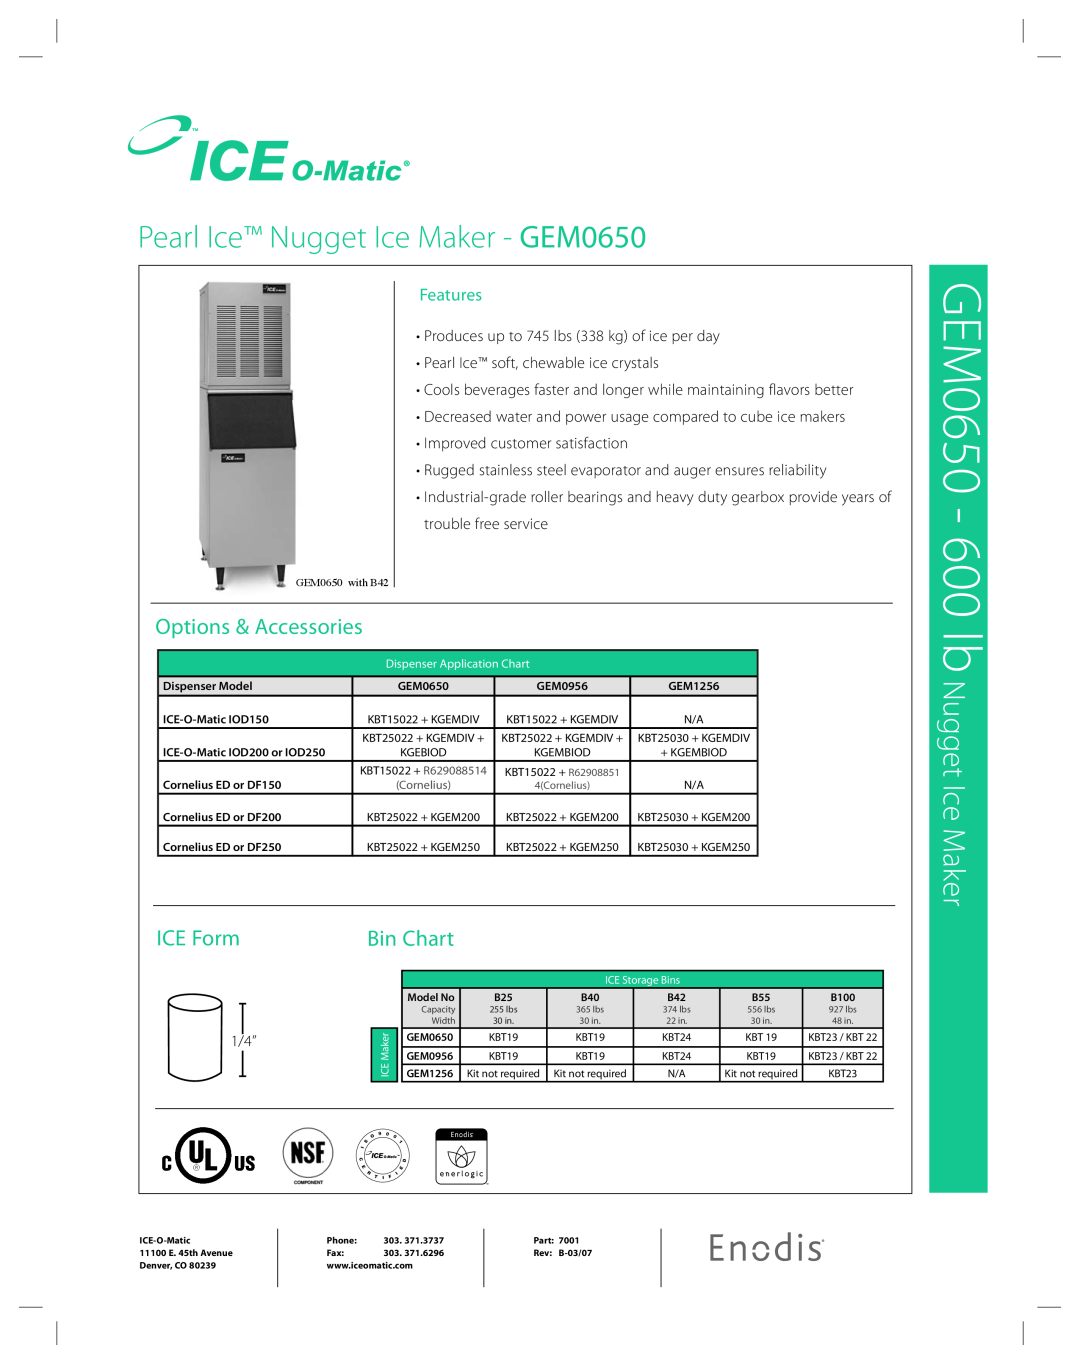 Ice-O-Matic GEM 0650 manual GEM0650 - 600 lb Nugget Ice Maker, Features, Pearl Ice Nugget Ice Maker - GEM0650, ICE Form 